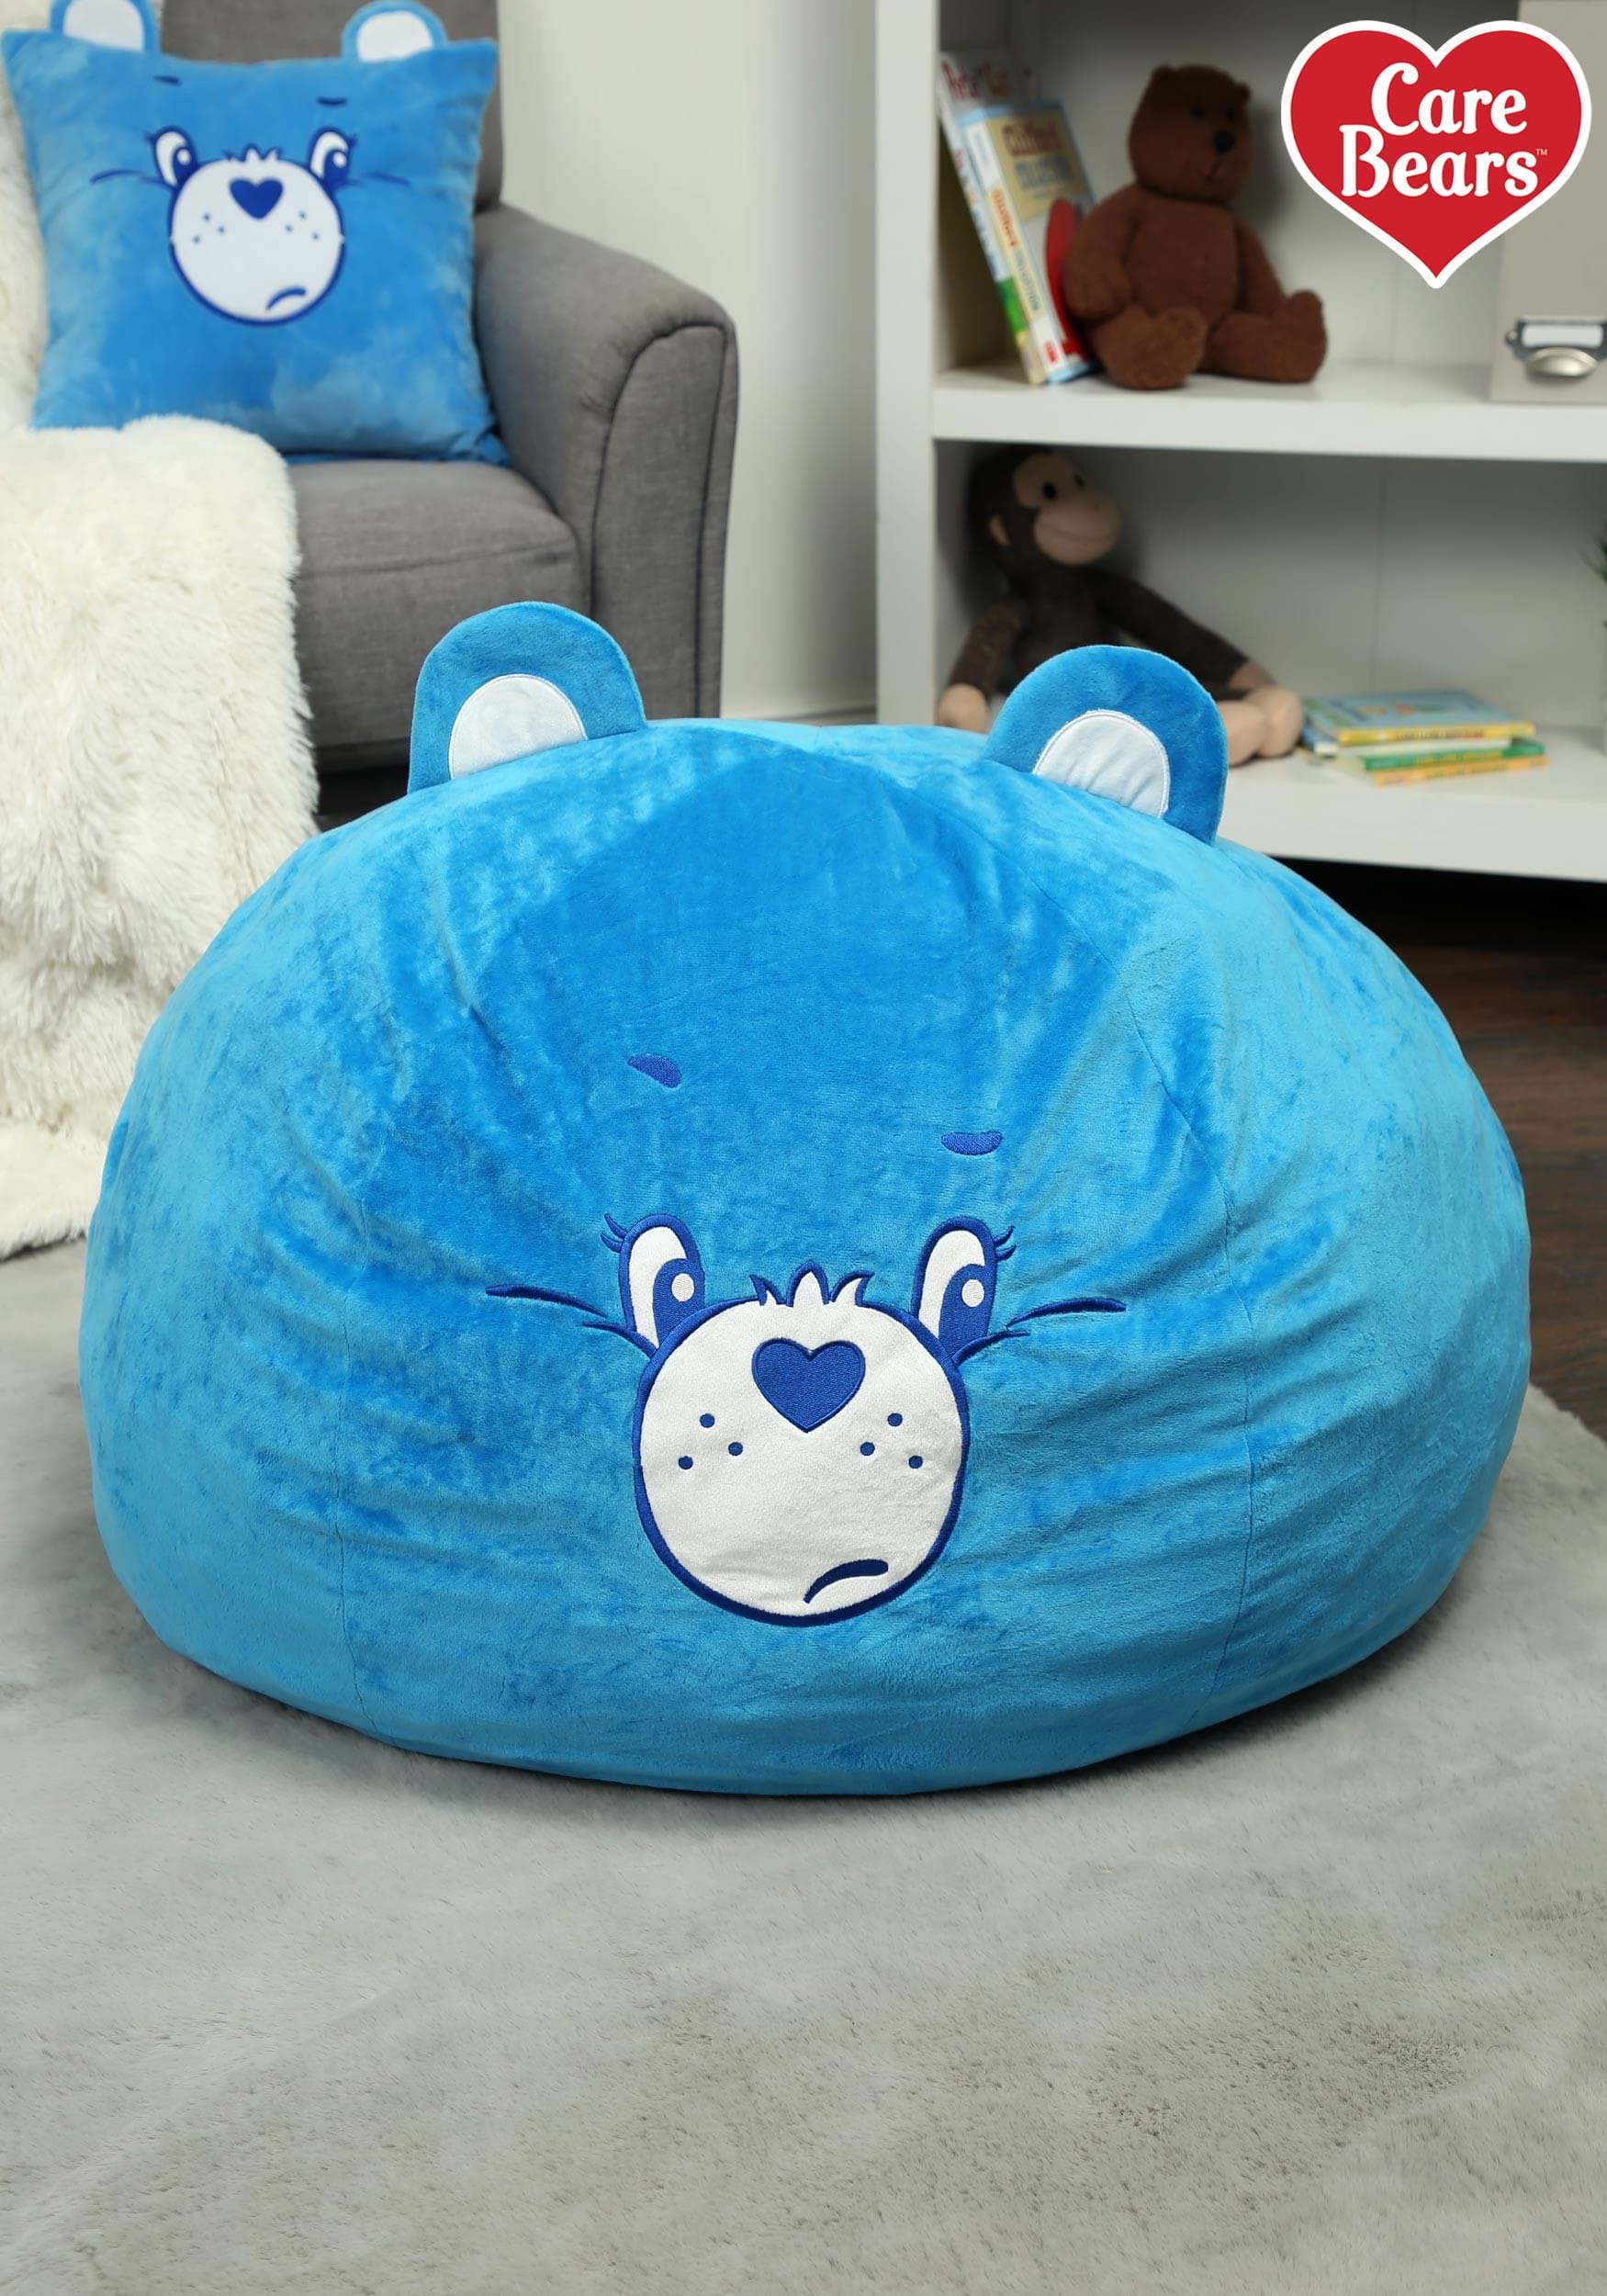 https://images.fun.com/products/67671/1-1/kids-care-bears-grumpy-bear-pouf-2.jpg